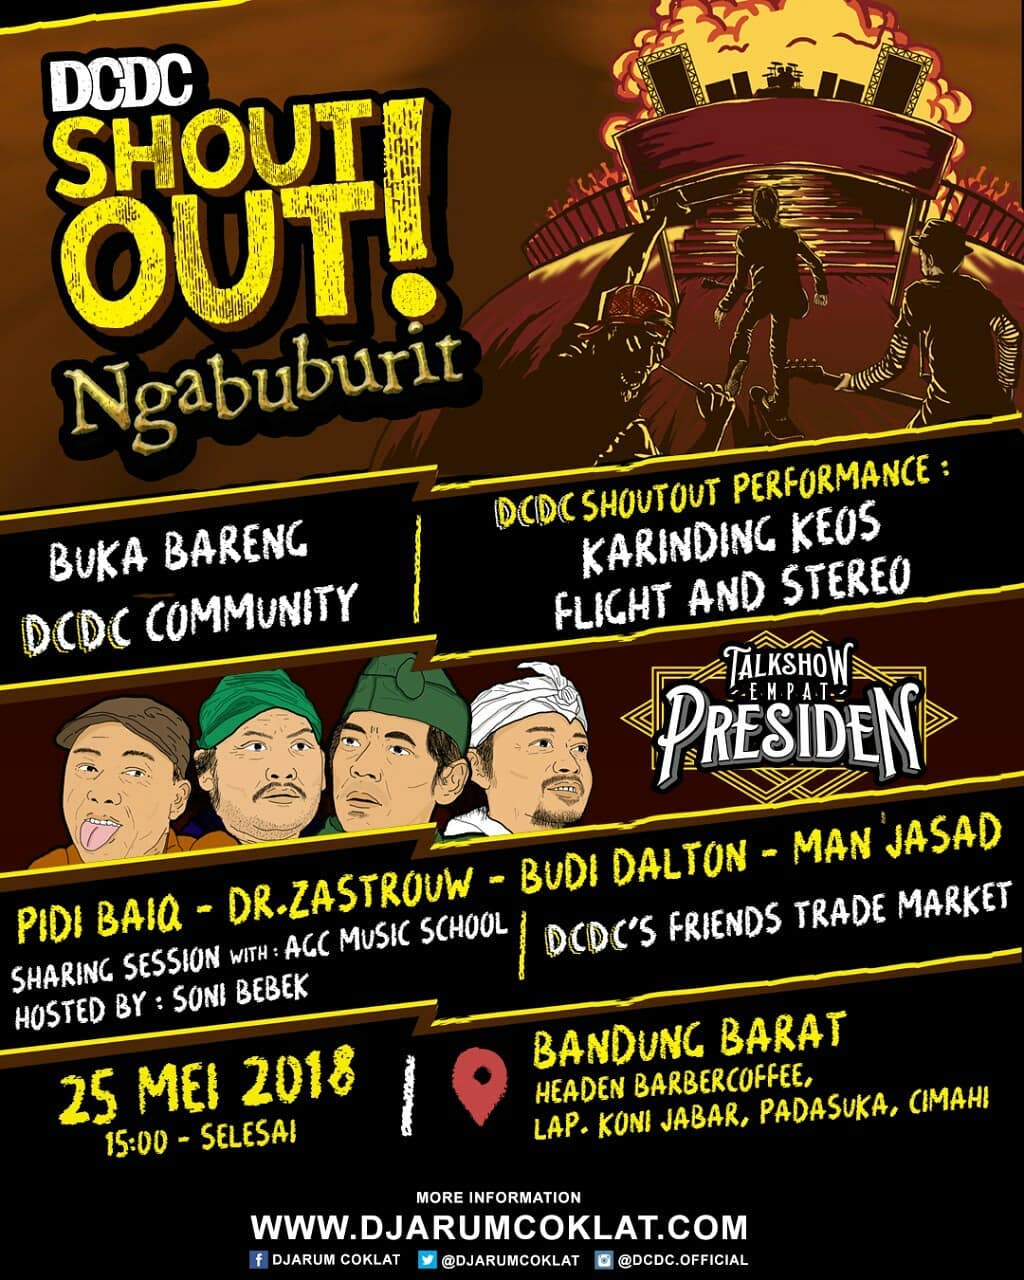 Shout Out! Ngabuburit Bandung Barat